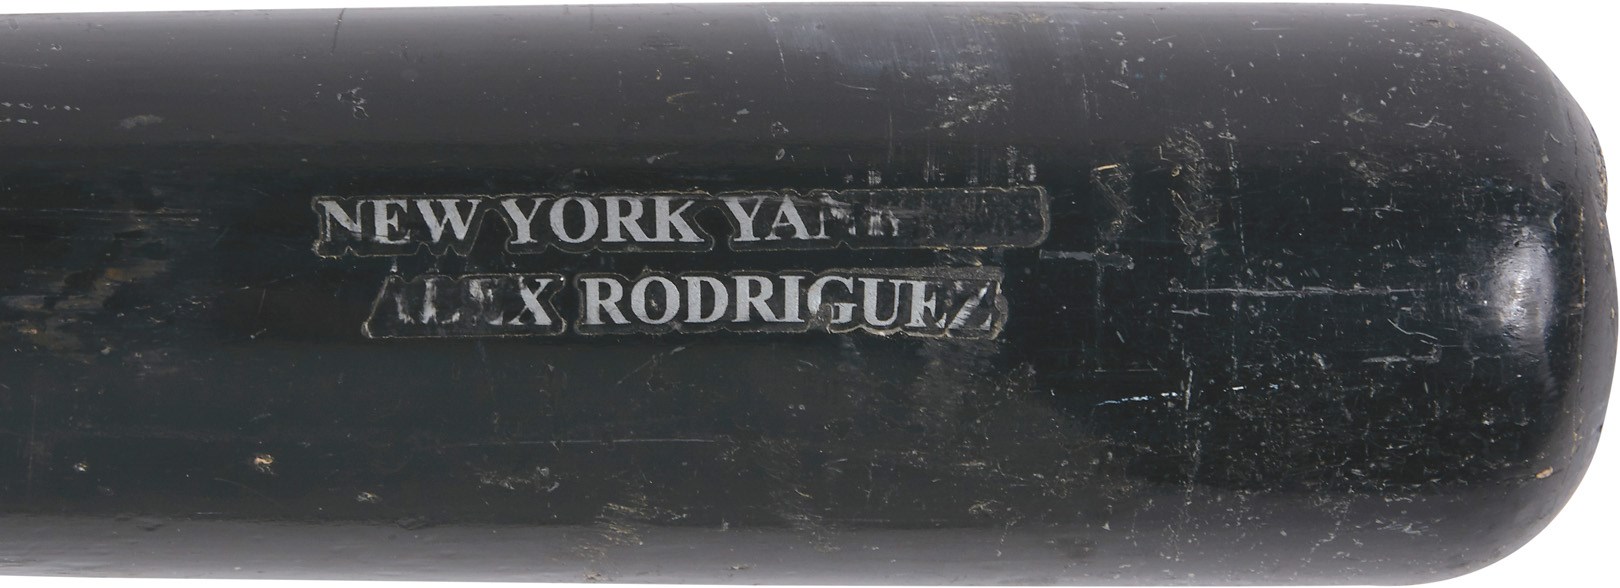 NY Yankees, Giants & Mets - Circa 2005 Alex Rodriguez Game Used Mattingly Model Bat (PSA LOA)